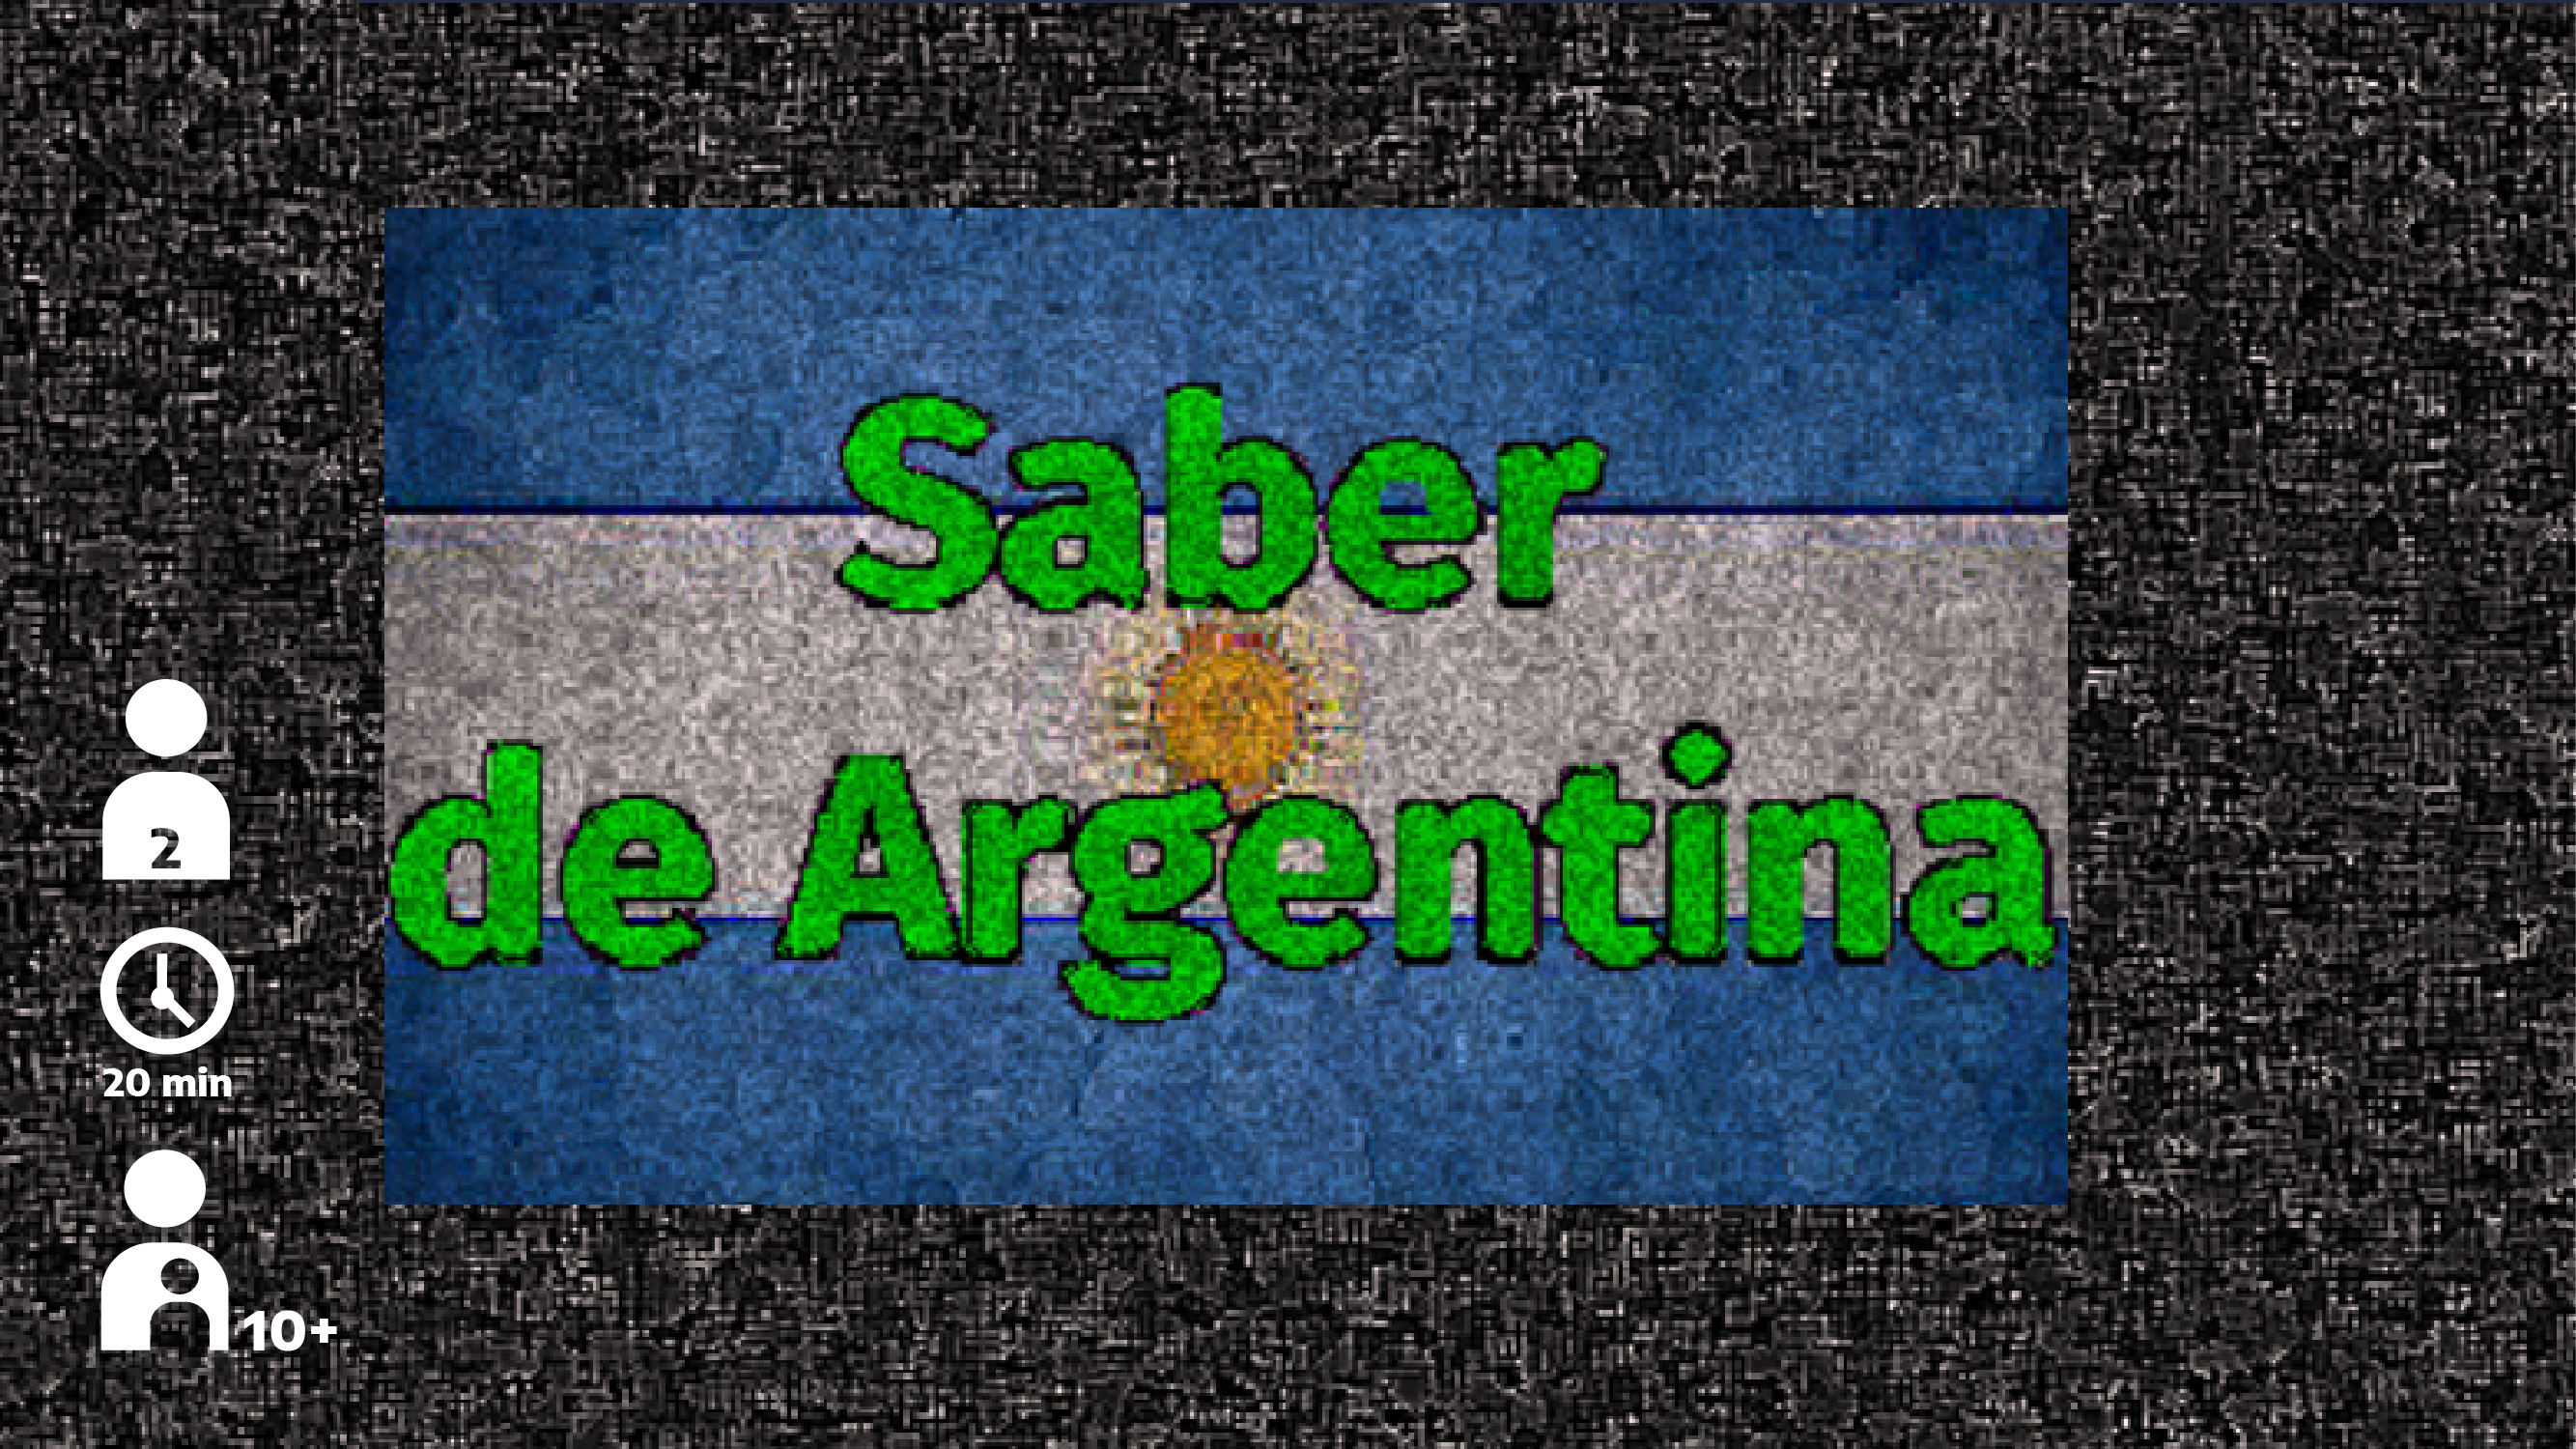 Saber de Argentina